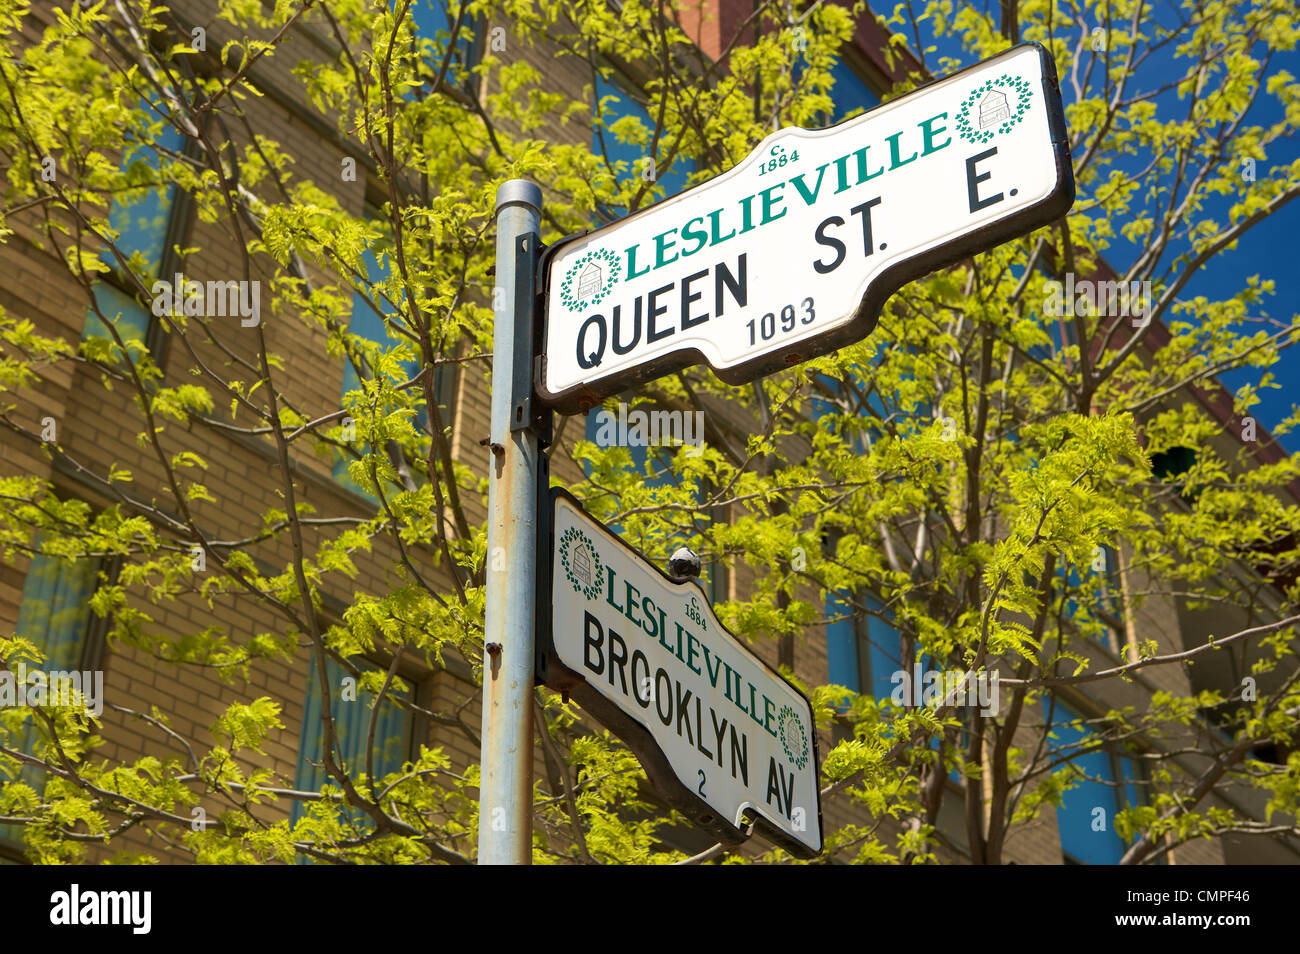 Queen St. East und Brooklyn AV Straßenschilder, Leslieville, Toronto, Ontario Stockfoto